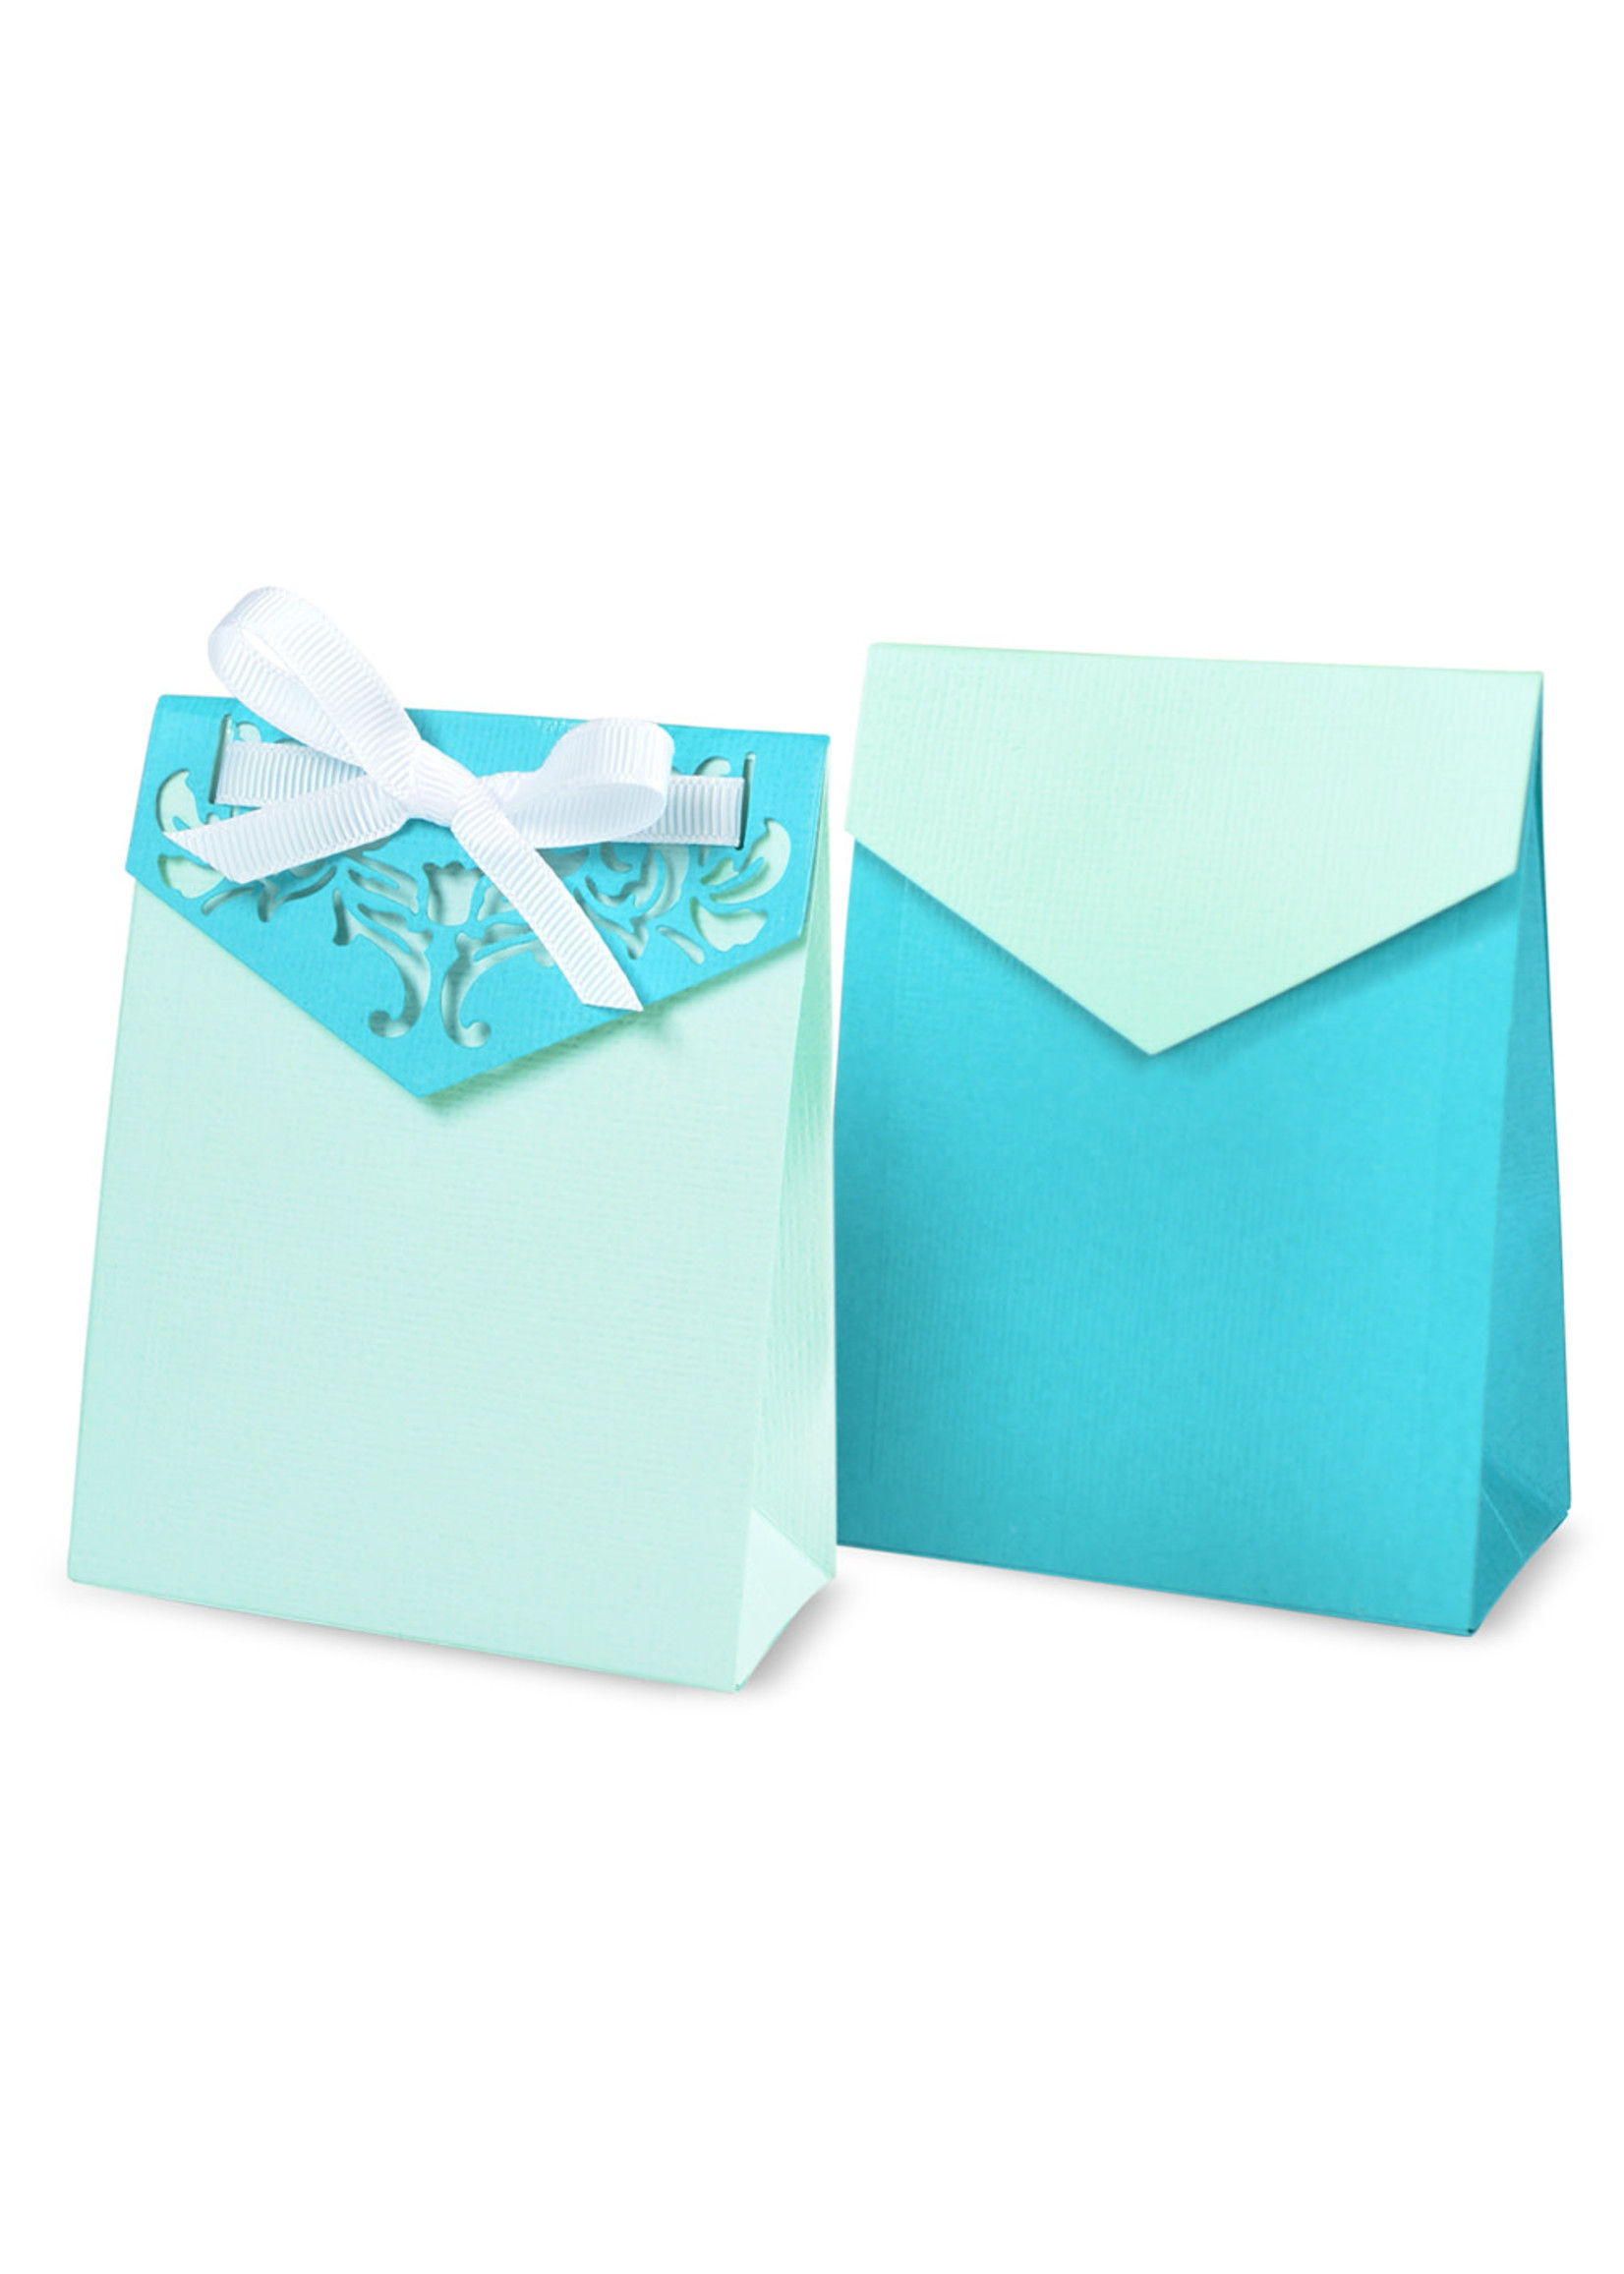 Sizzix Celebration Gift Box Thinlits Die